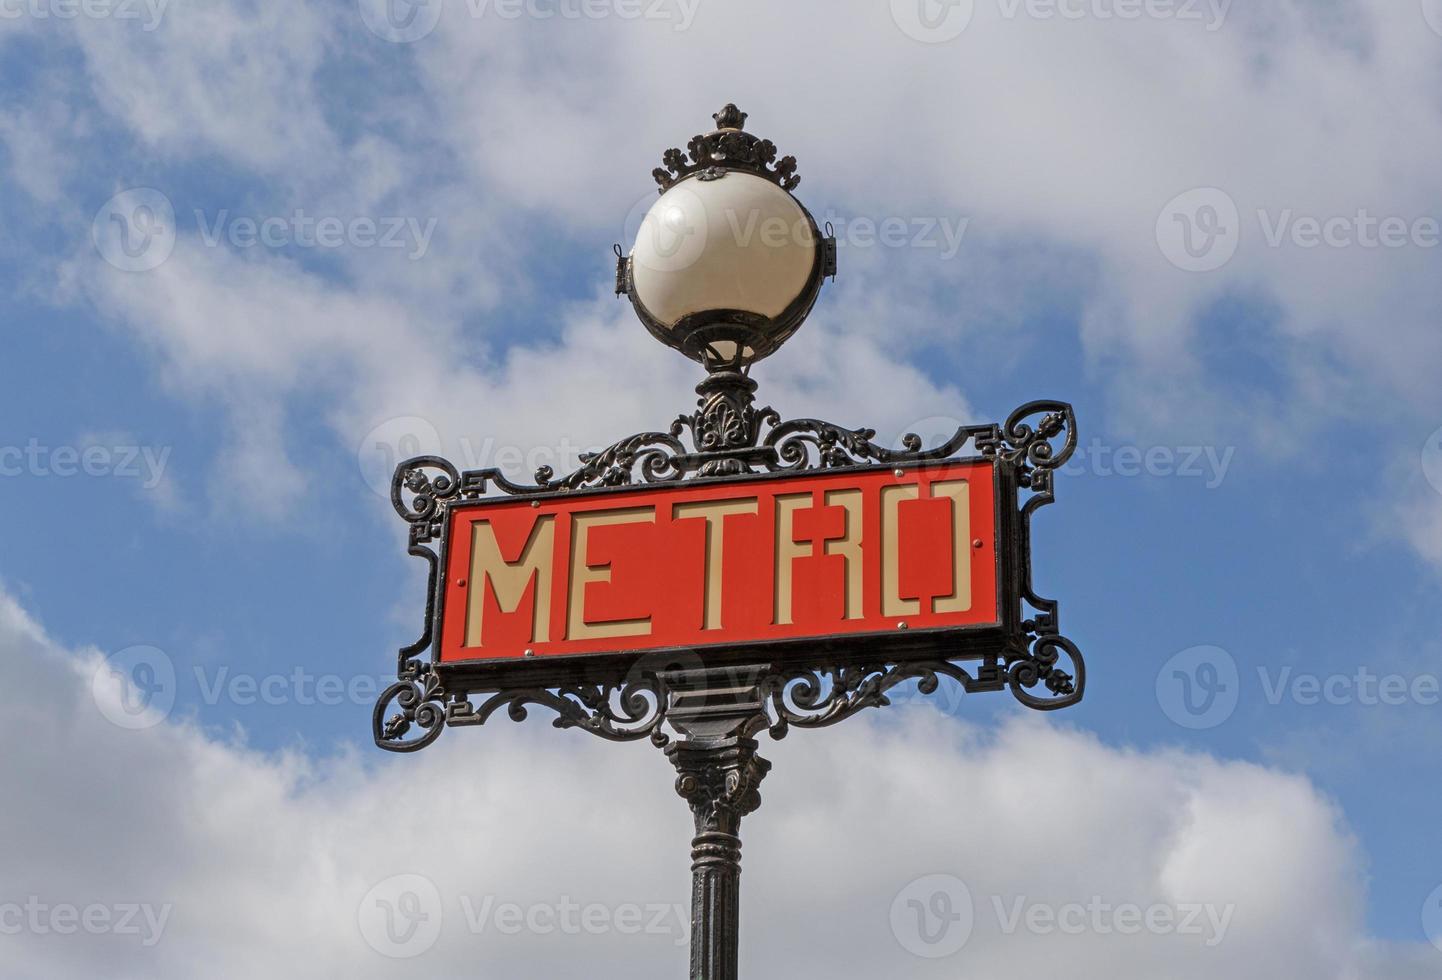 la metropolitana cartello nel Parigi contro blu cielo con nuvole foto